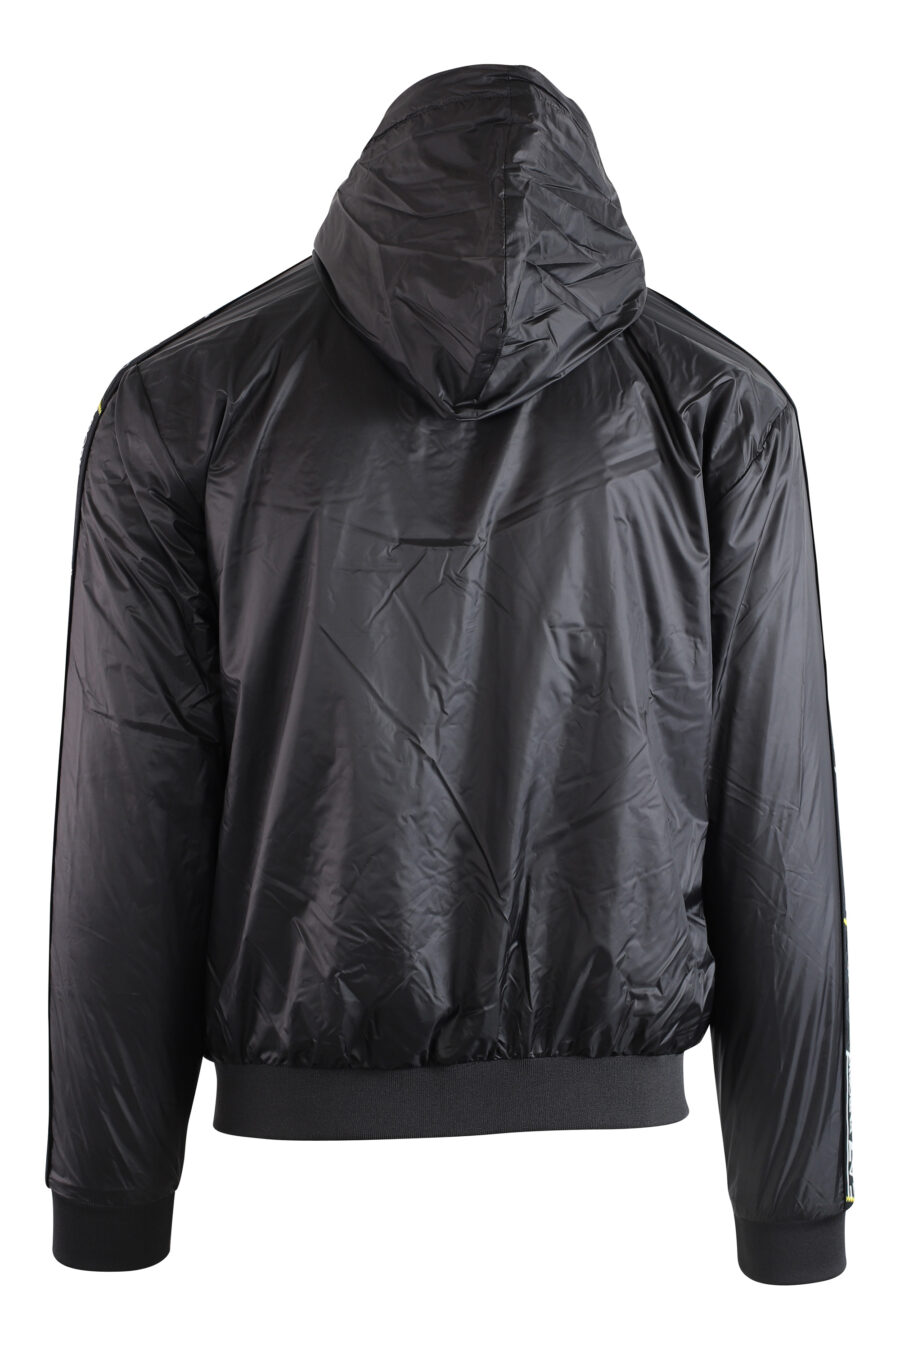 Chaqueta impermeable negra con capucha y logo en cinta laterales - IMG 3756